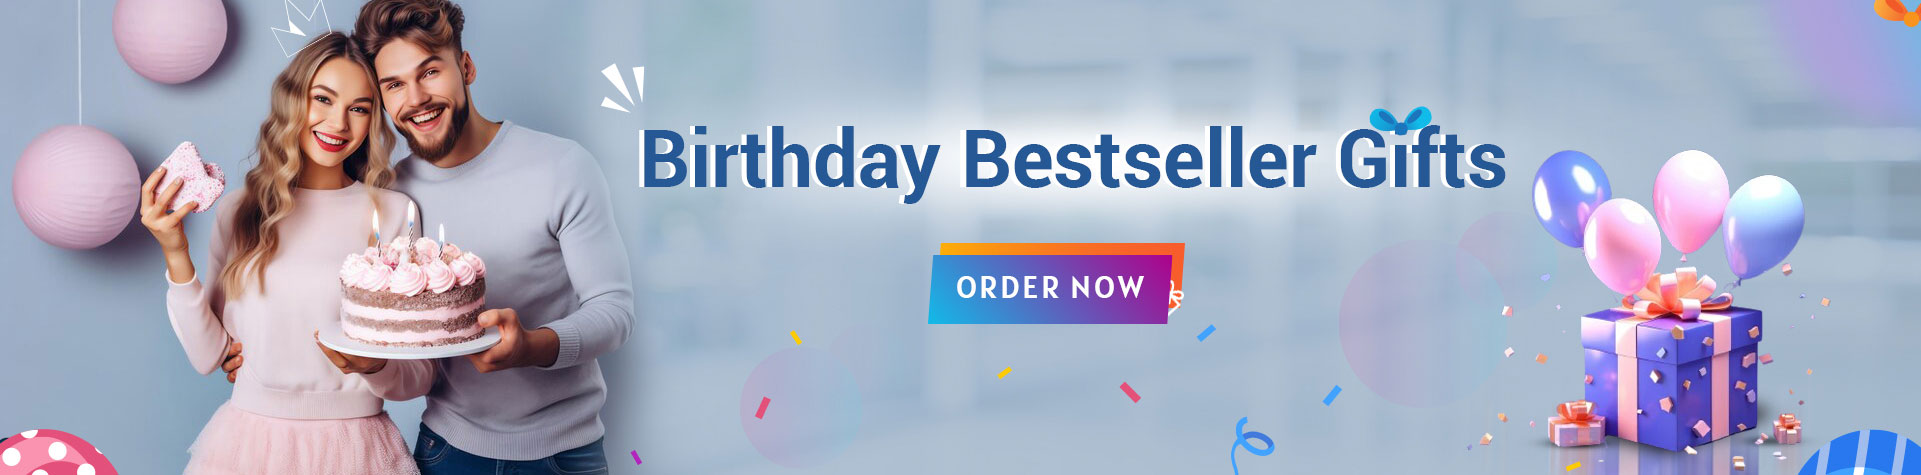 send birthday gifts online